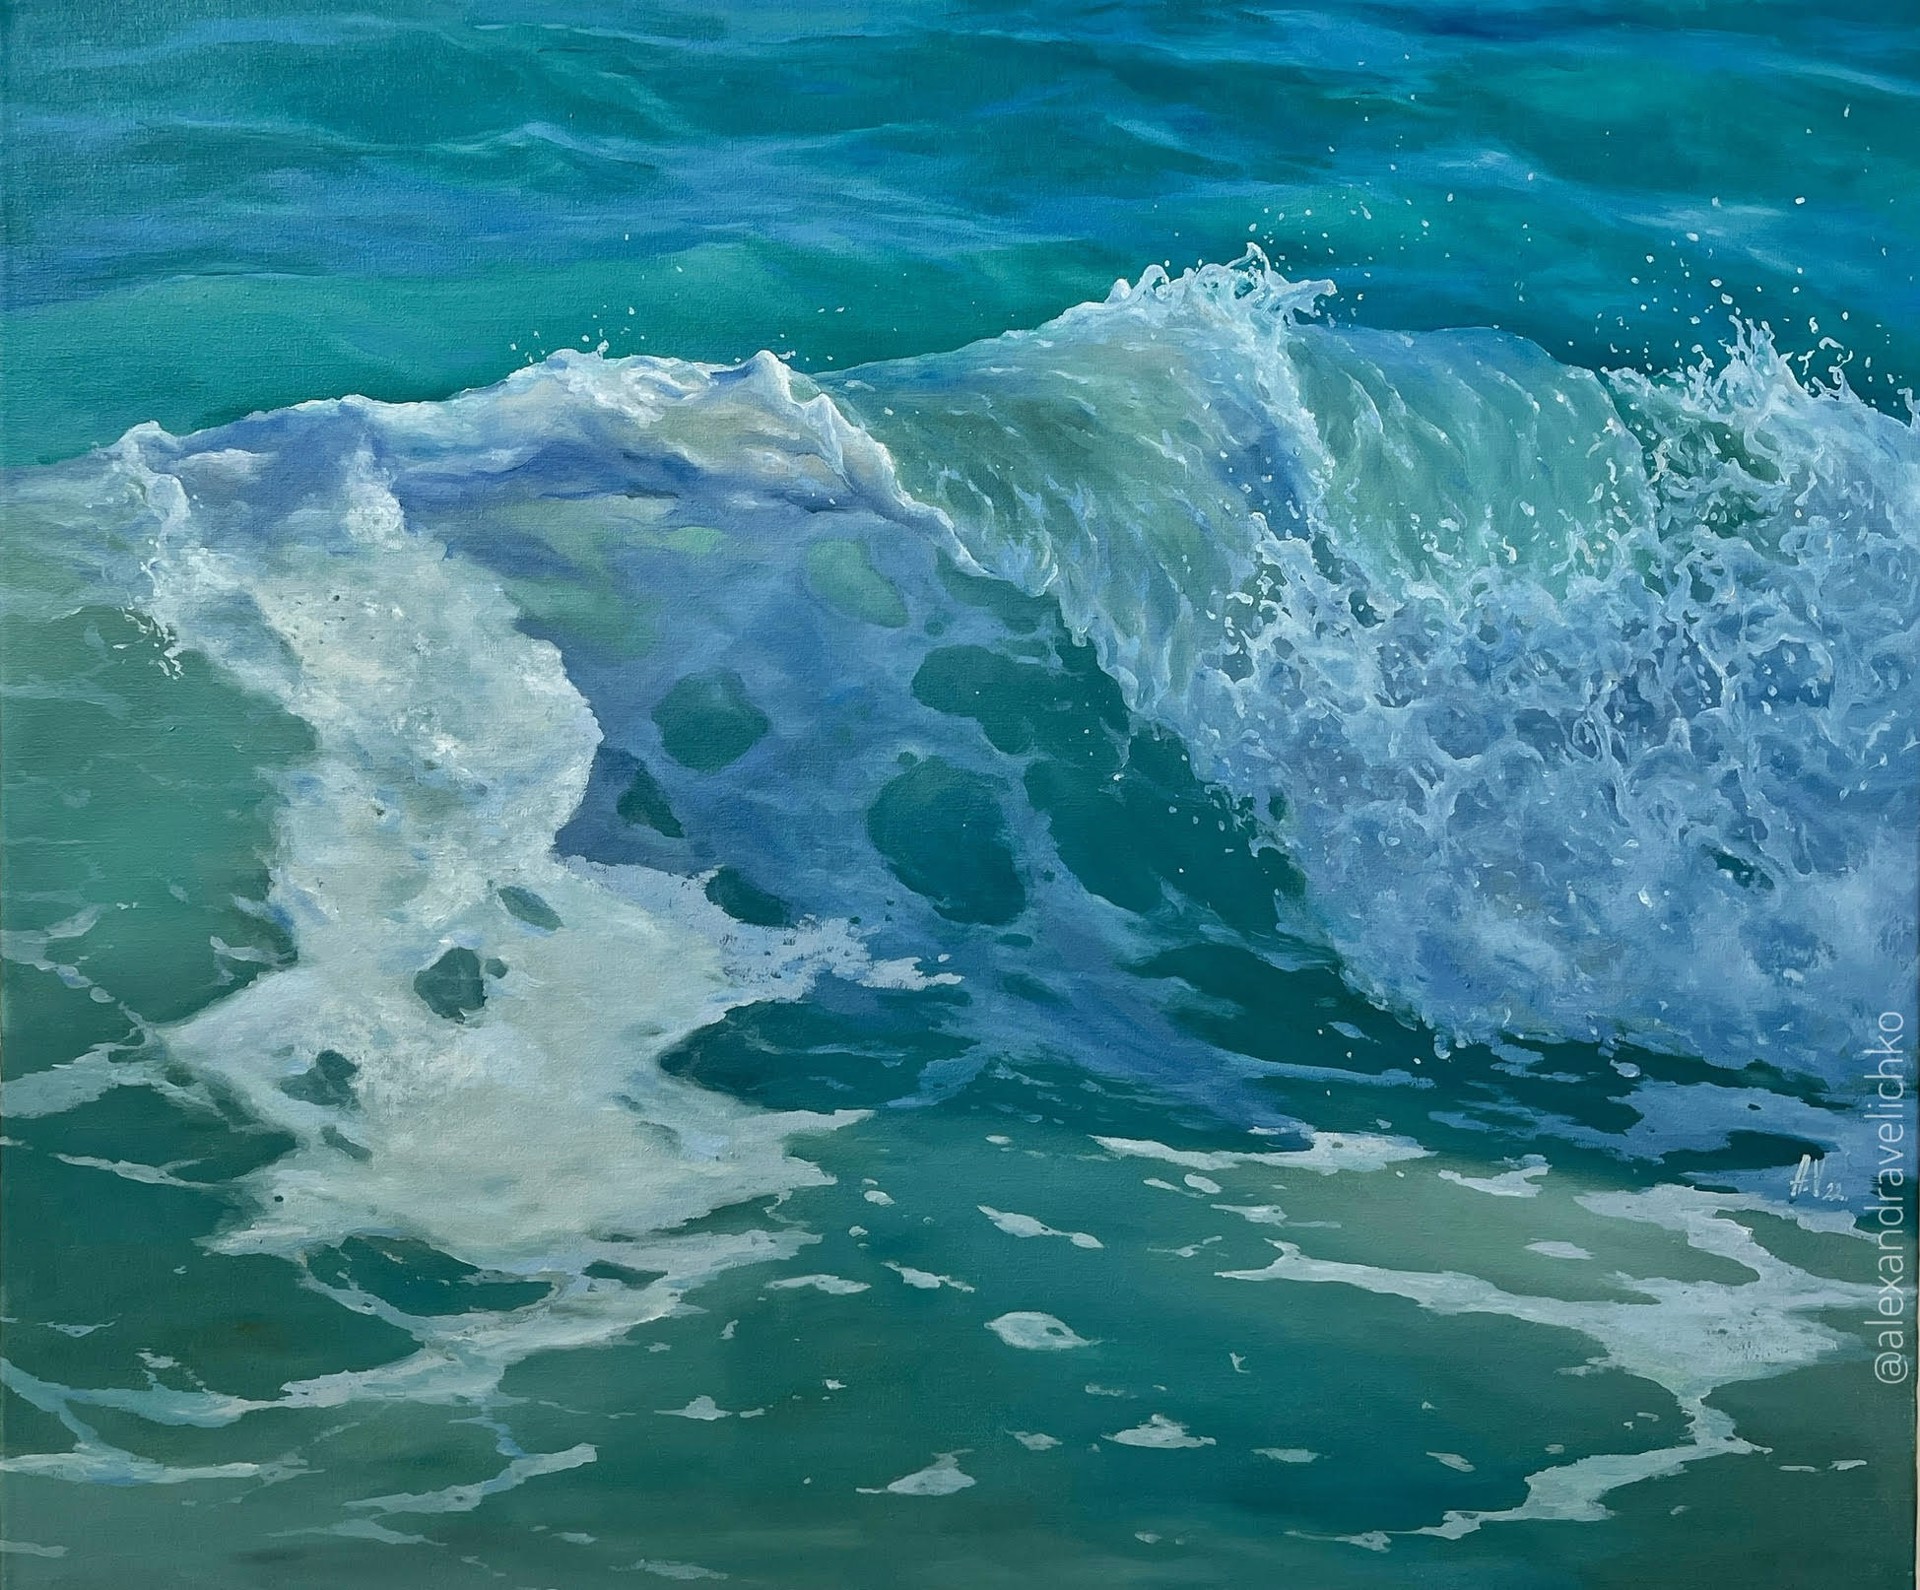 Inside The Wave by Alexandra Velichko